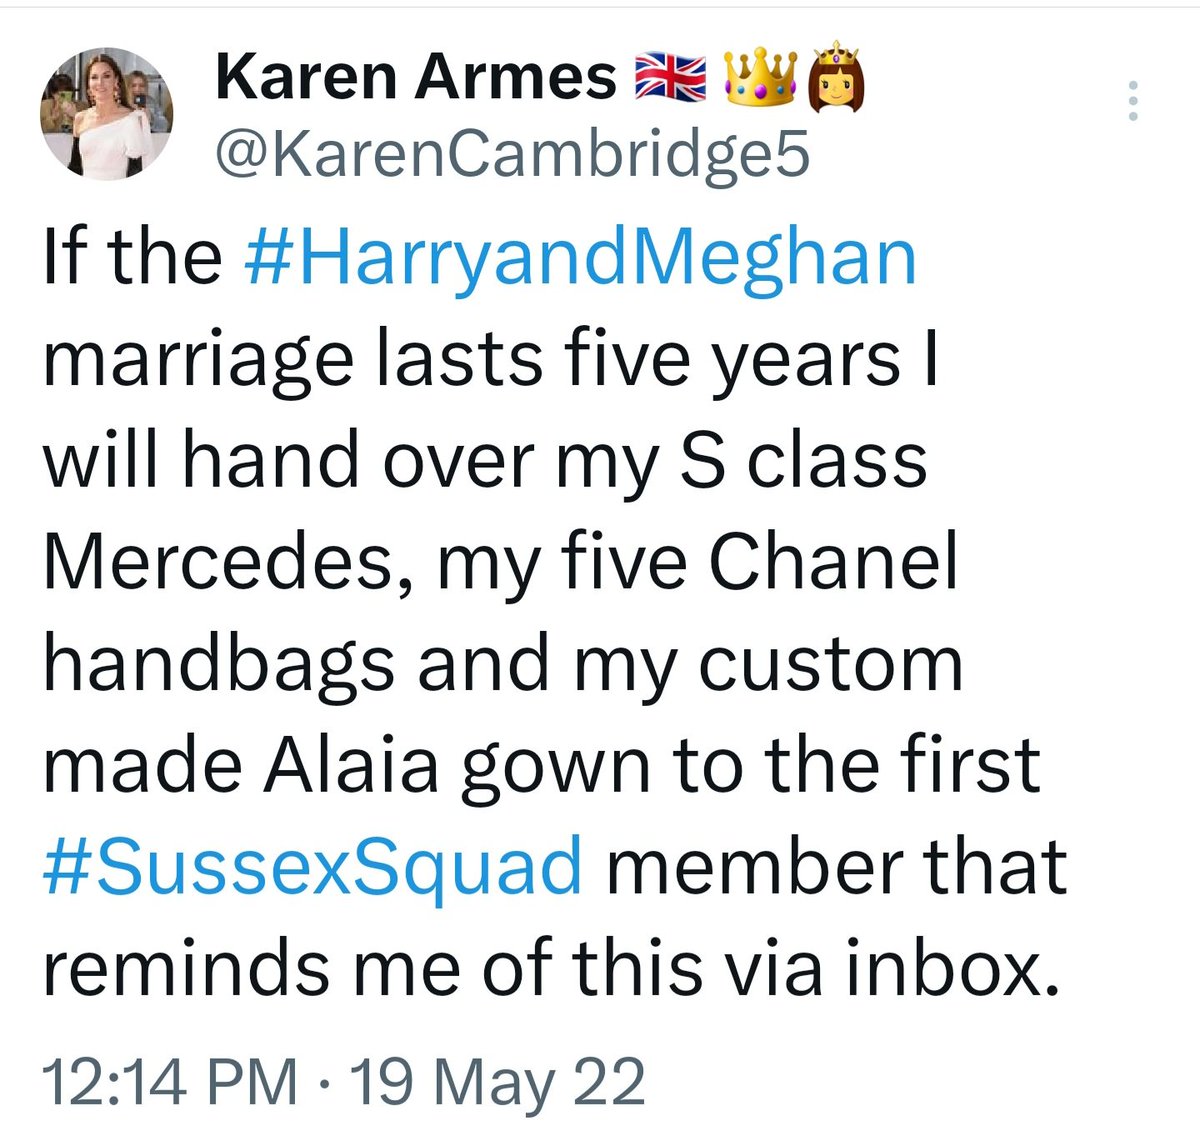 Hey, Karen:  I hope you're ready to hand over those items you mentioned in the Tweet below. 😏  #HarryandMegan #5yearsweddinganniversary